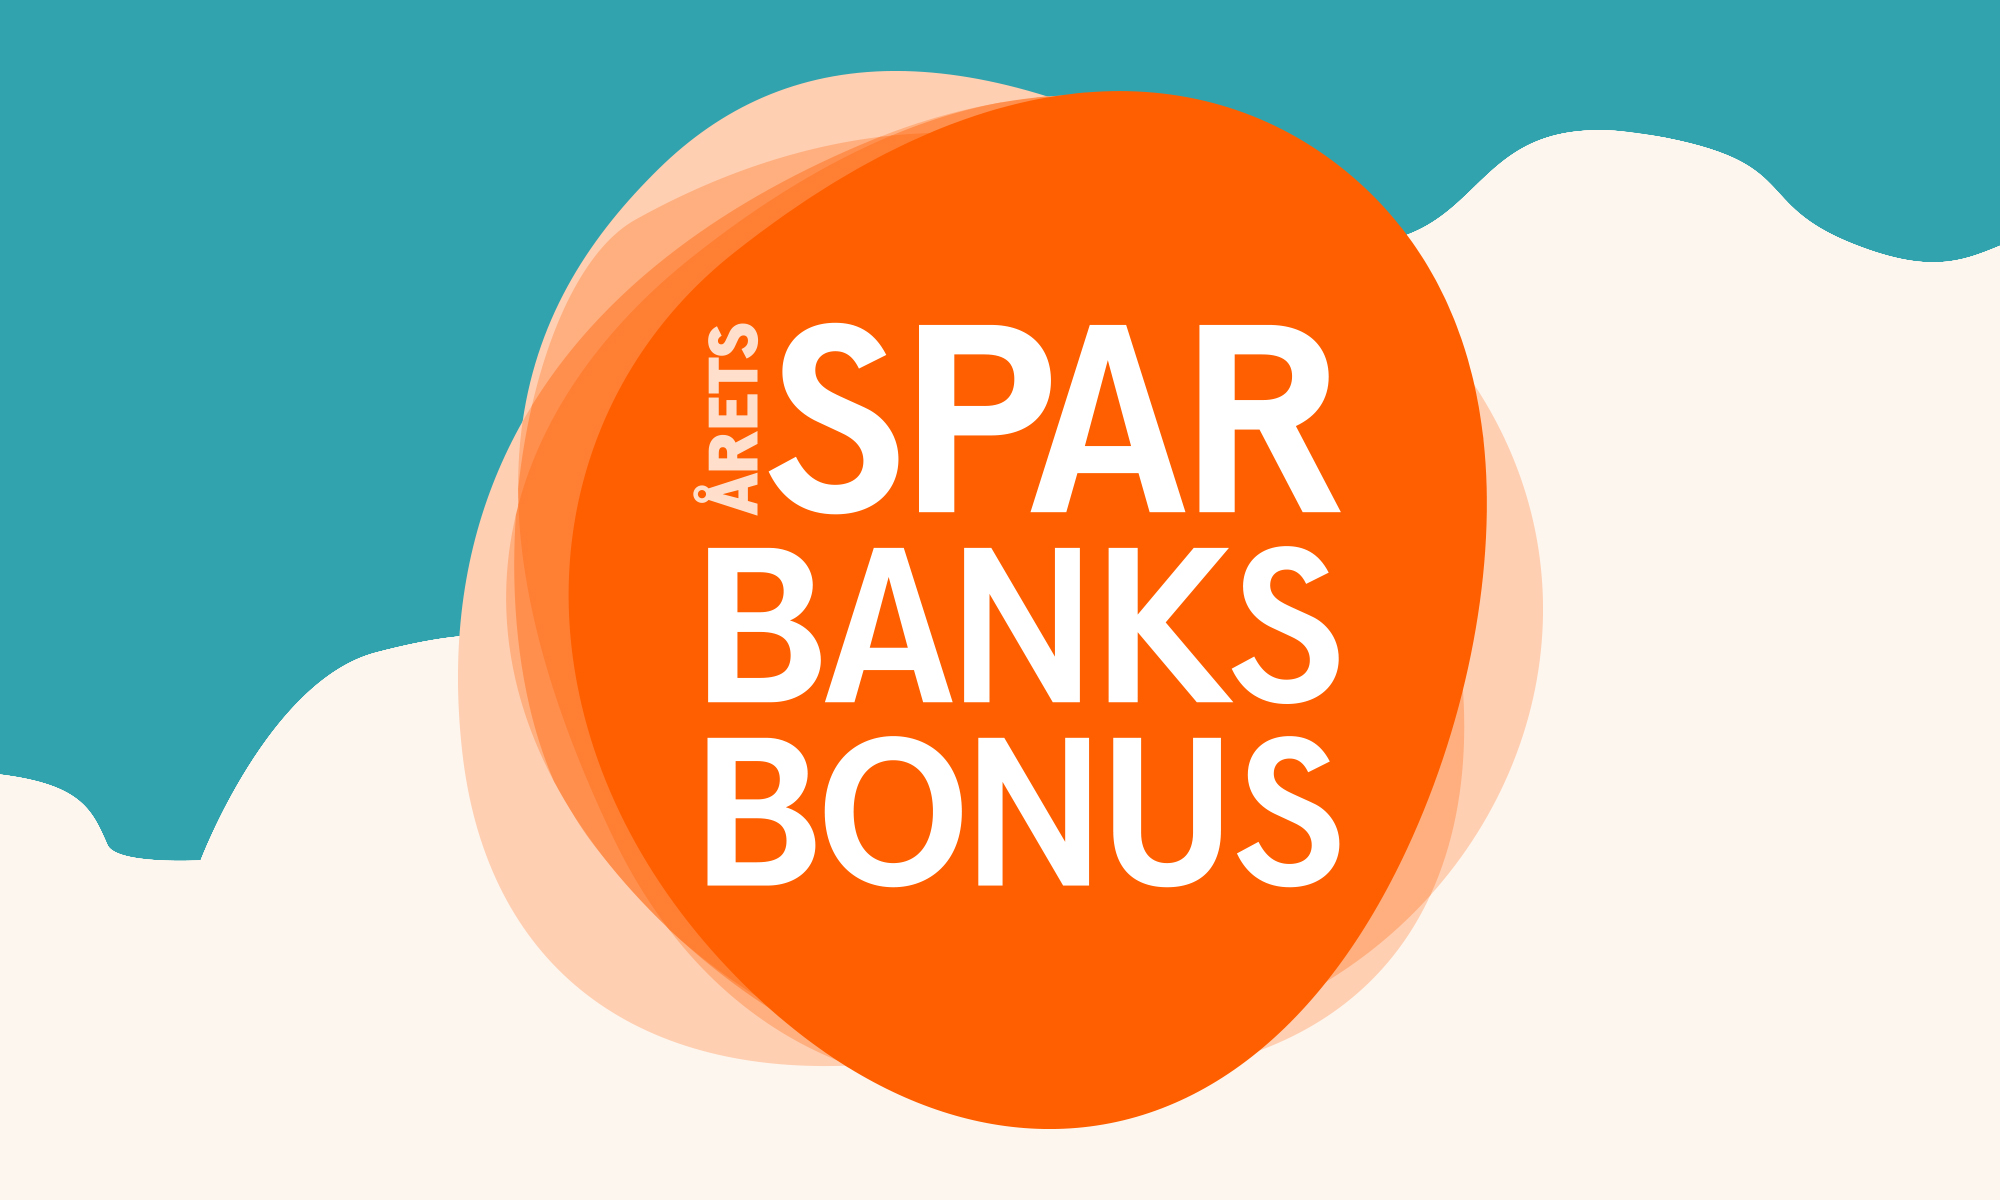 Sparbanksbonus - Savings banks bonus in Bergslagen, Sweden